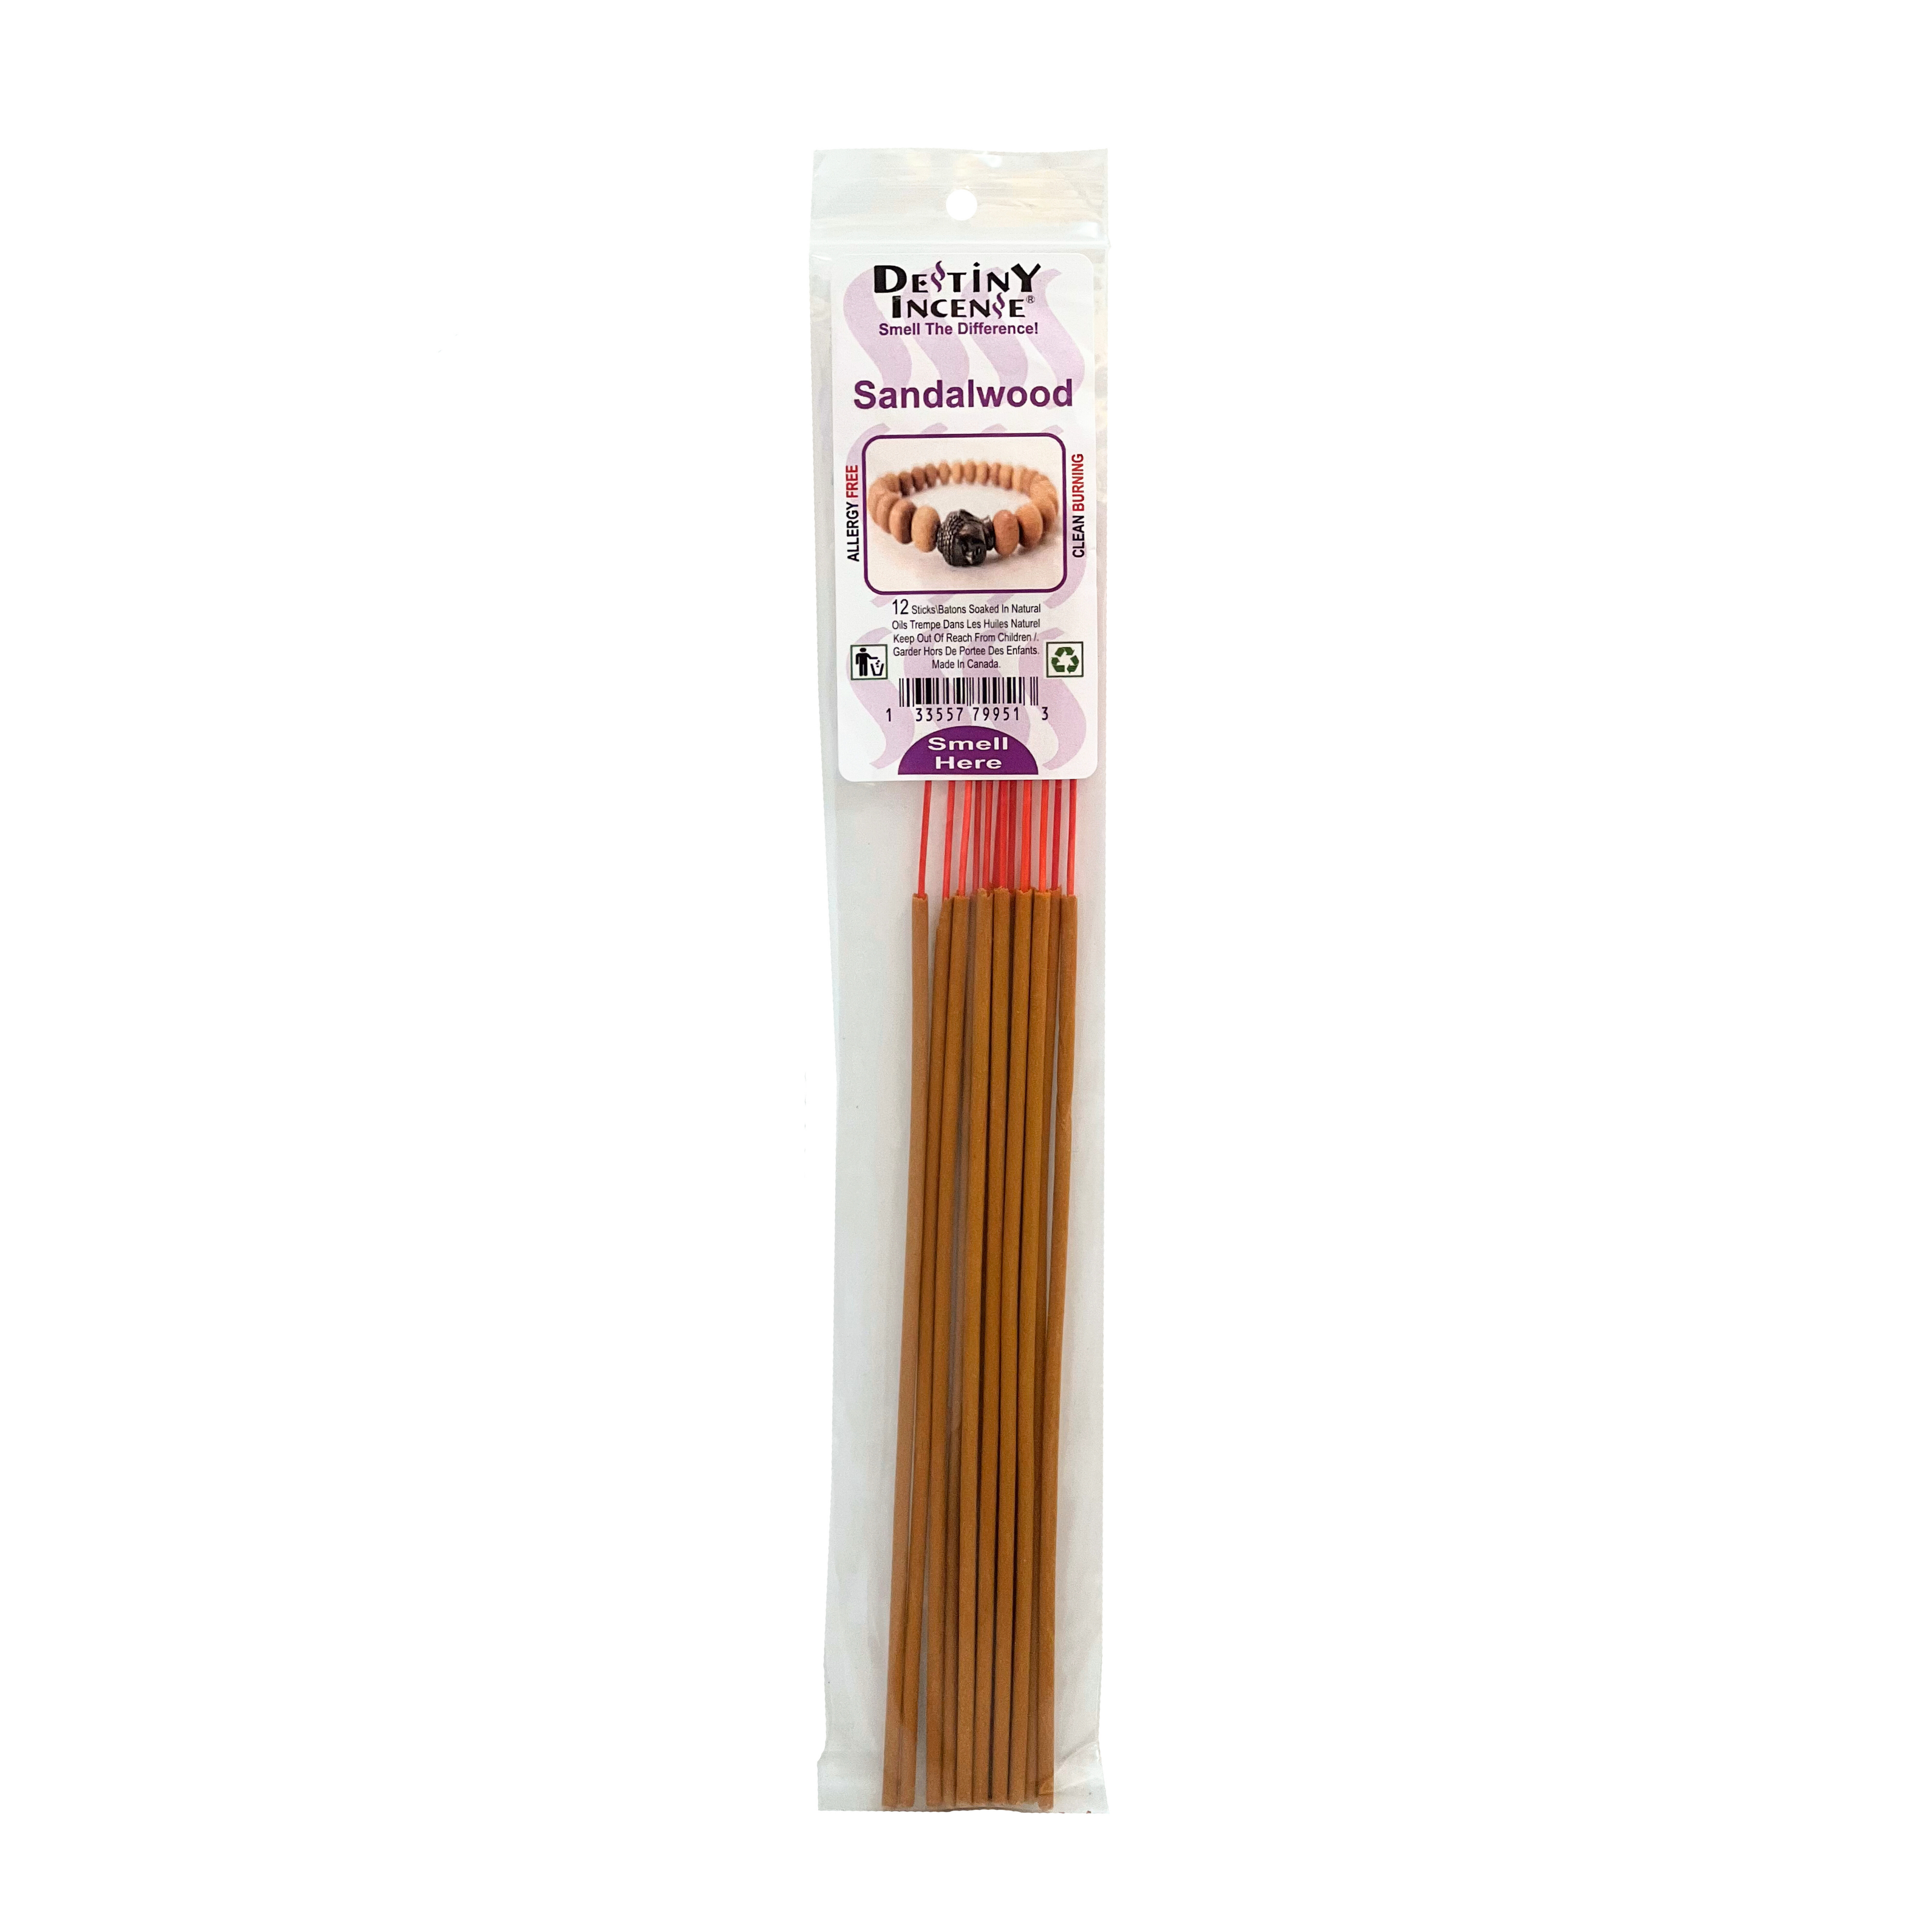 Destiny incense Sandalwood 12 sticks